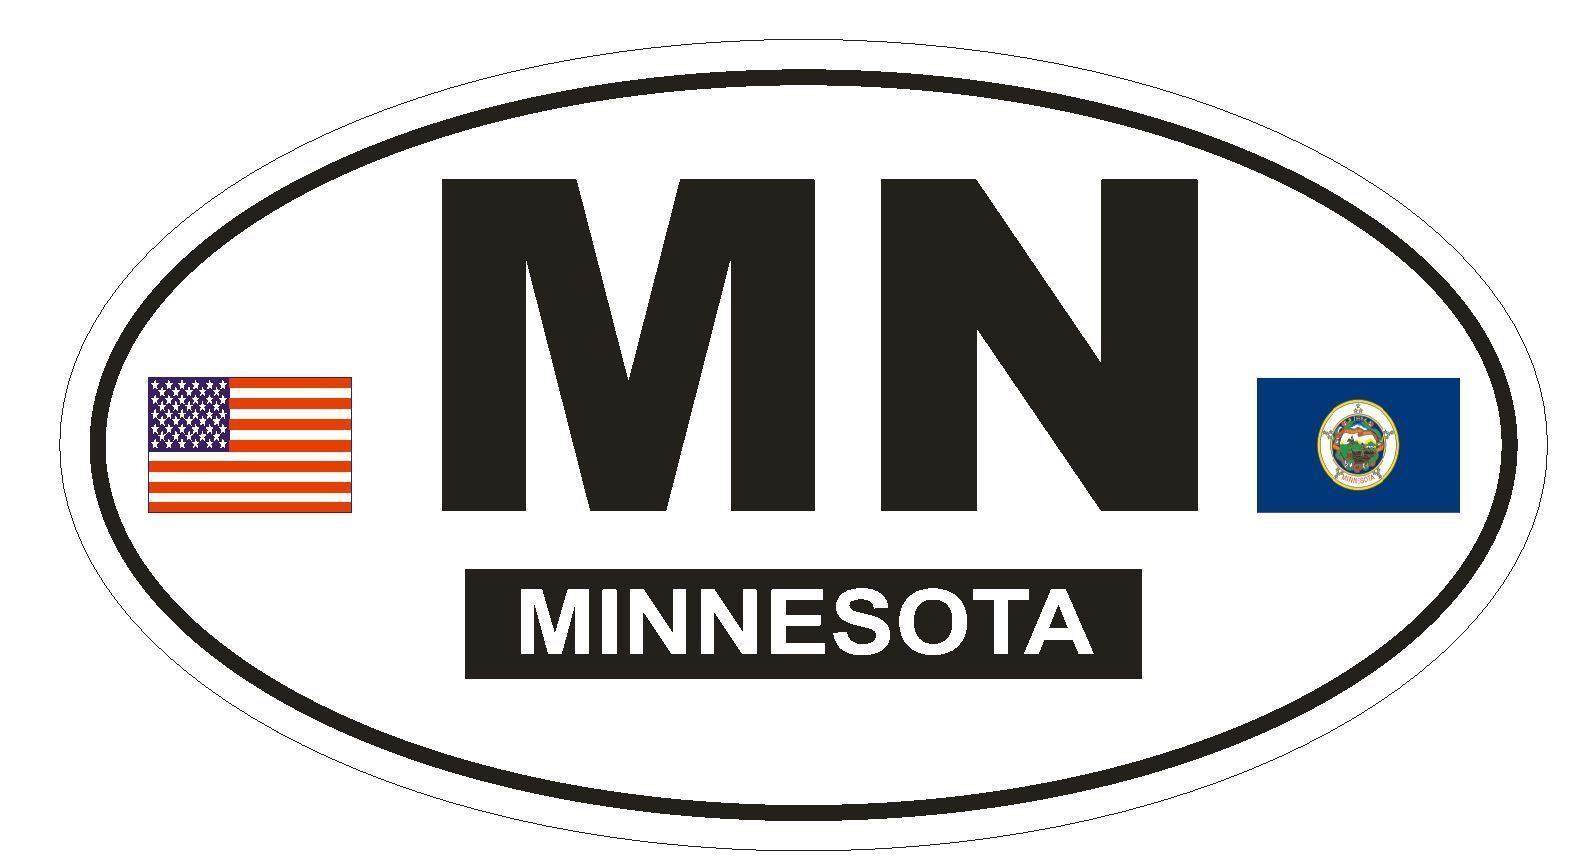 MN Minnesota Oval Bumper Sticker or Helmet Sticker D791 Euro Oval with Flag - $1.39 - $75.00